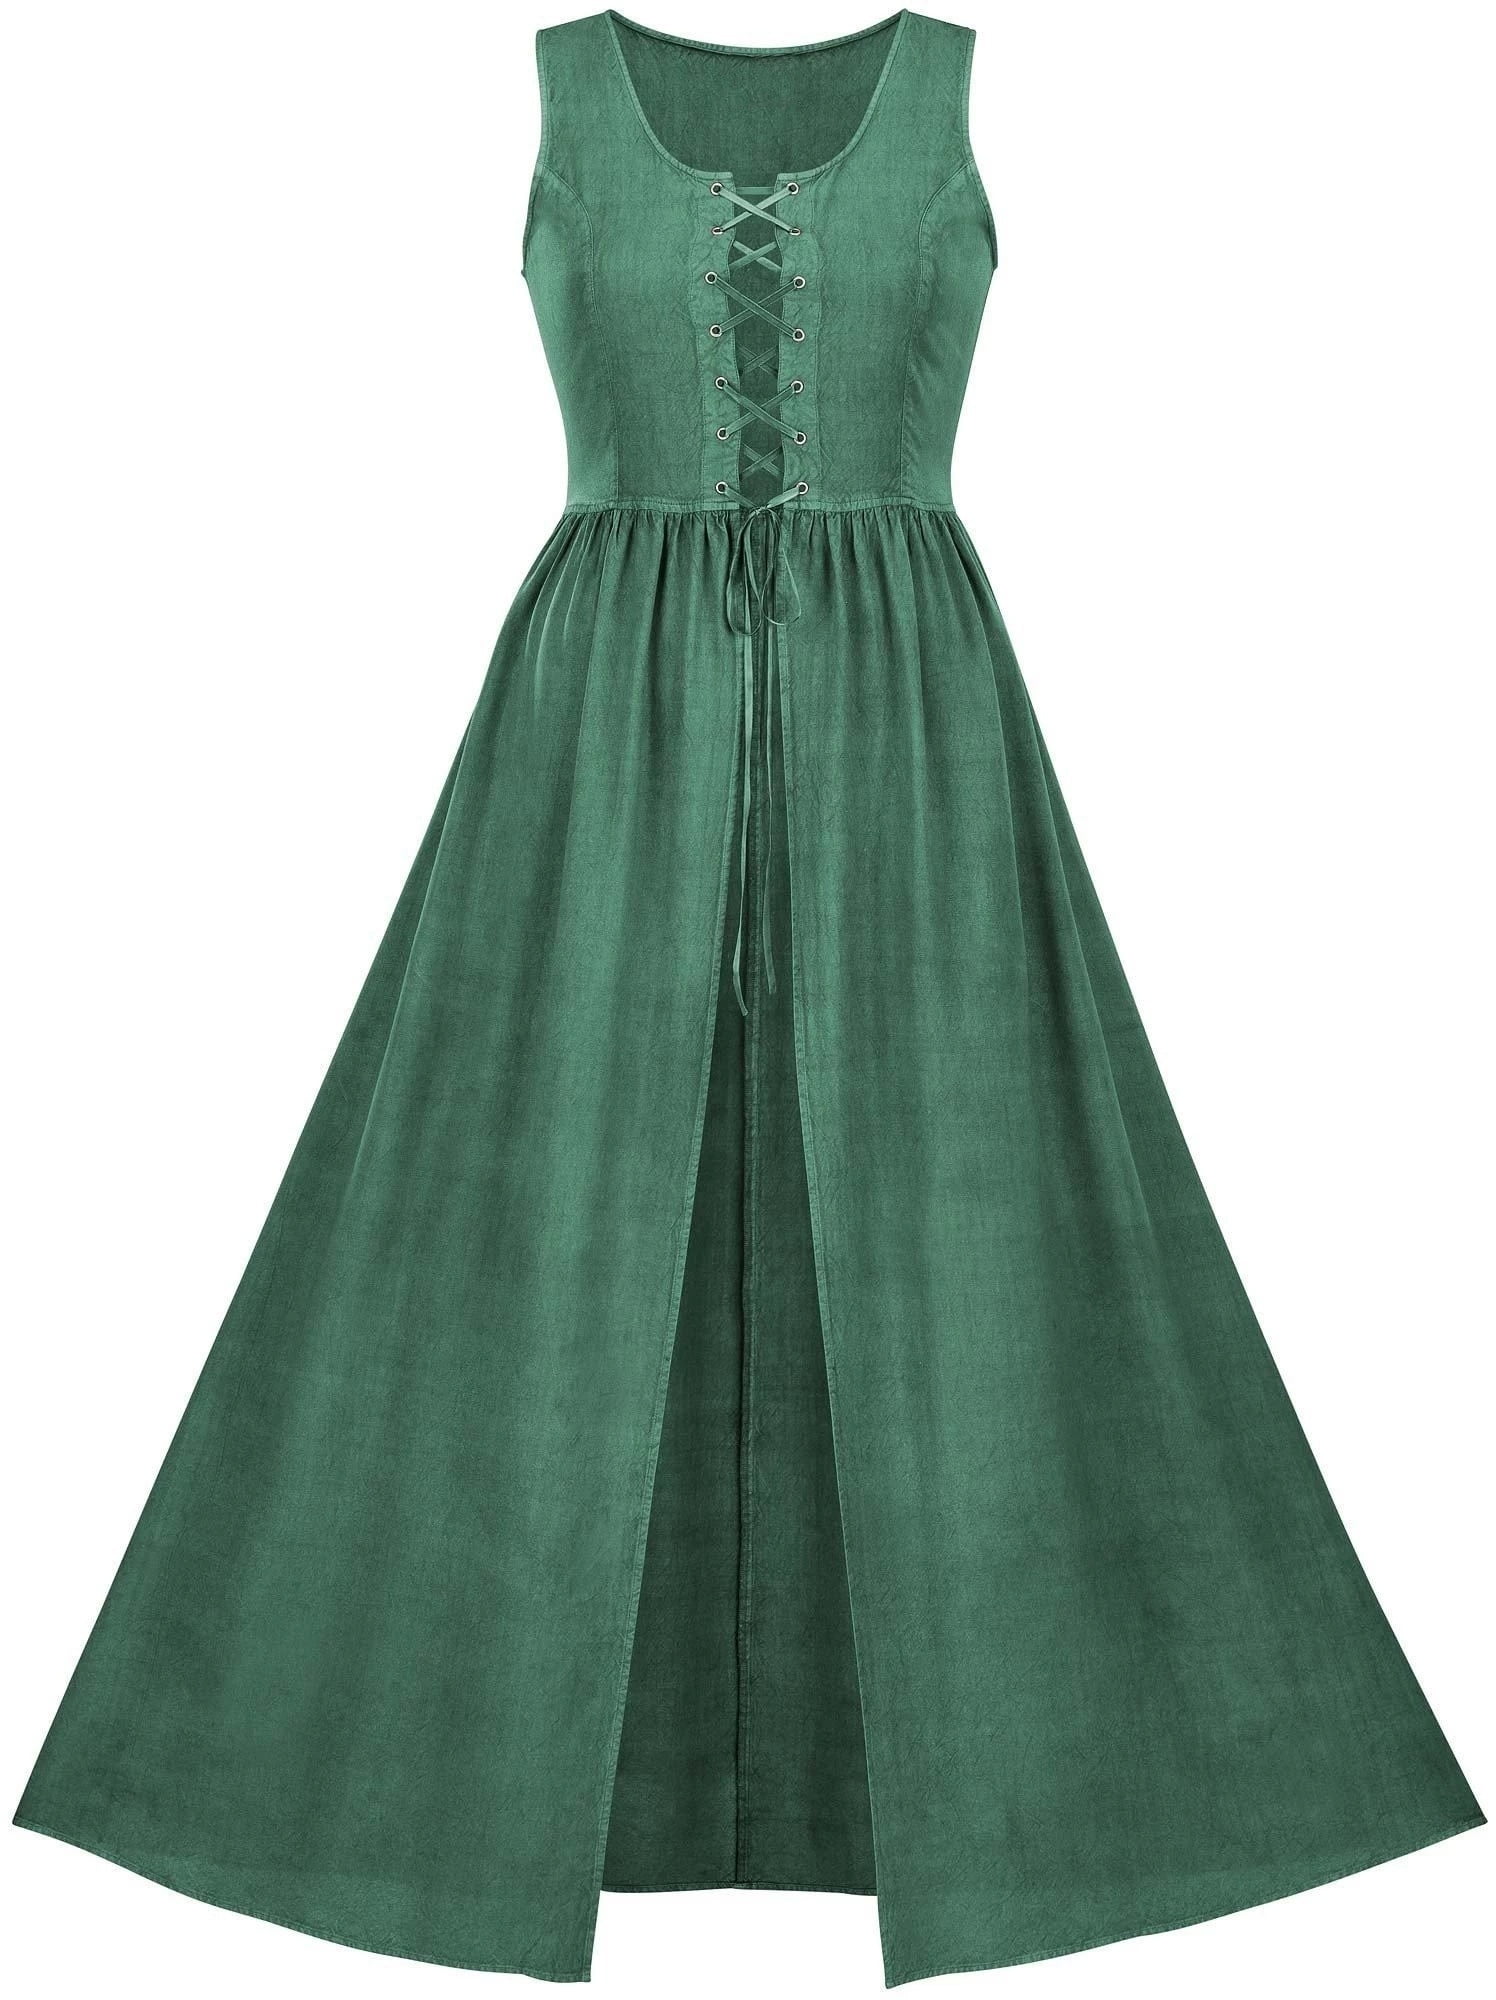 medieval summer dress